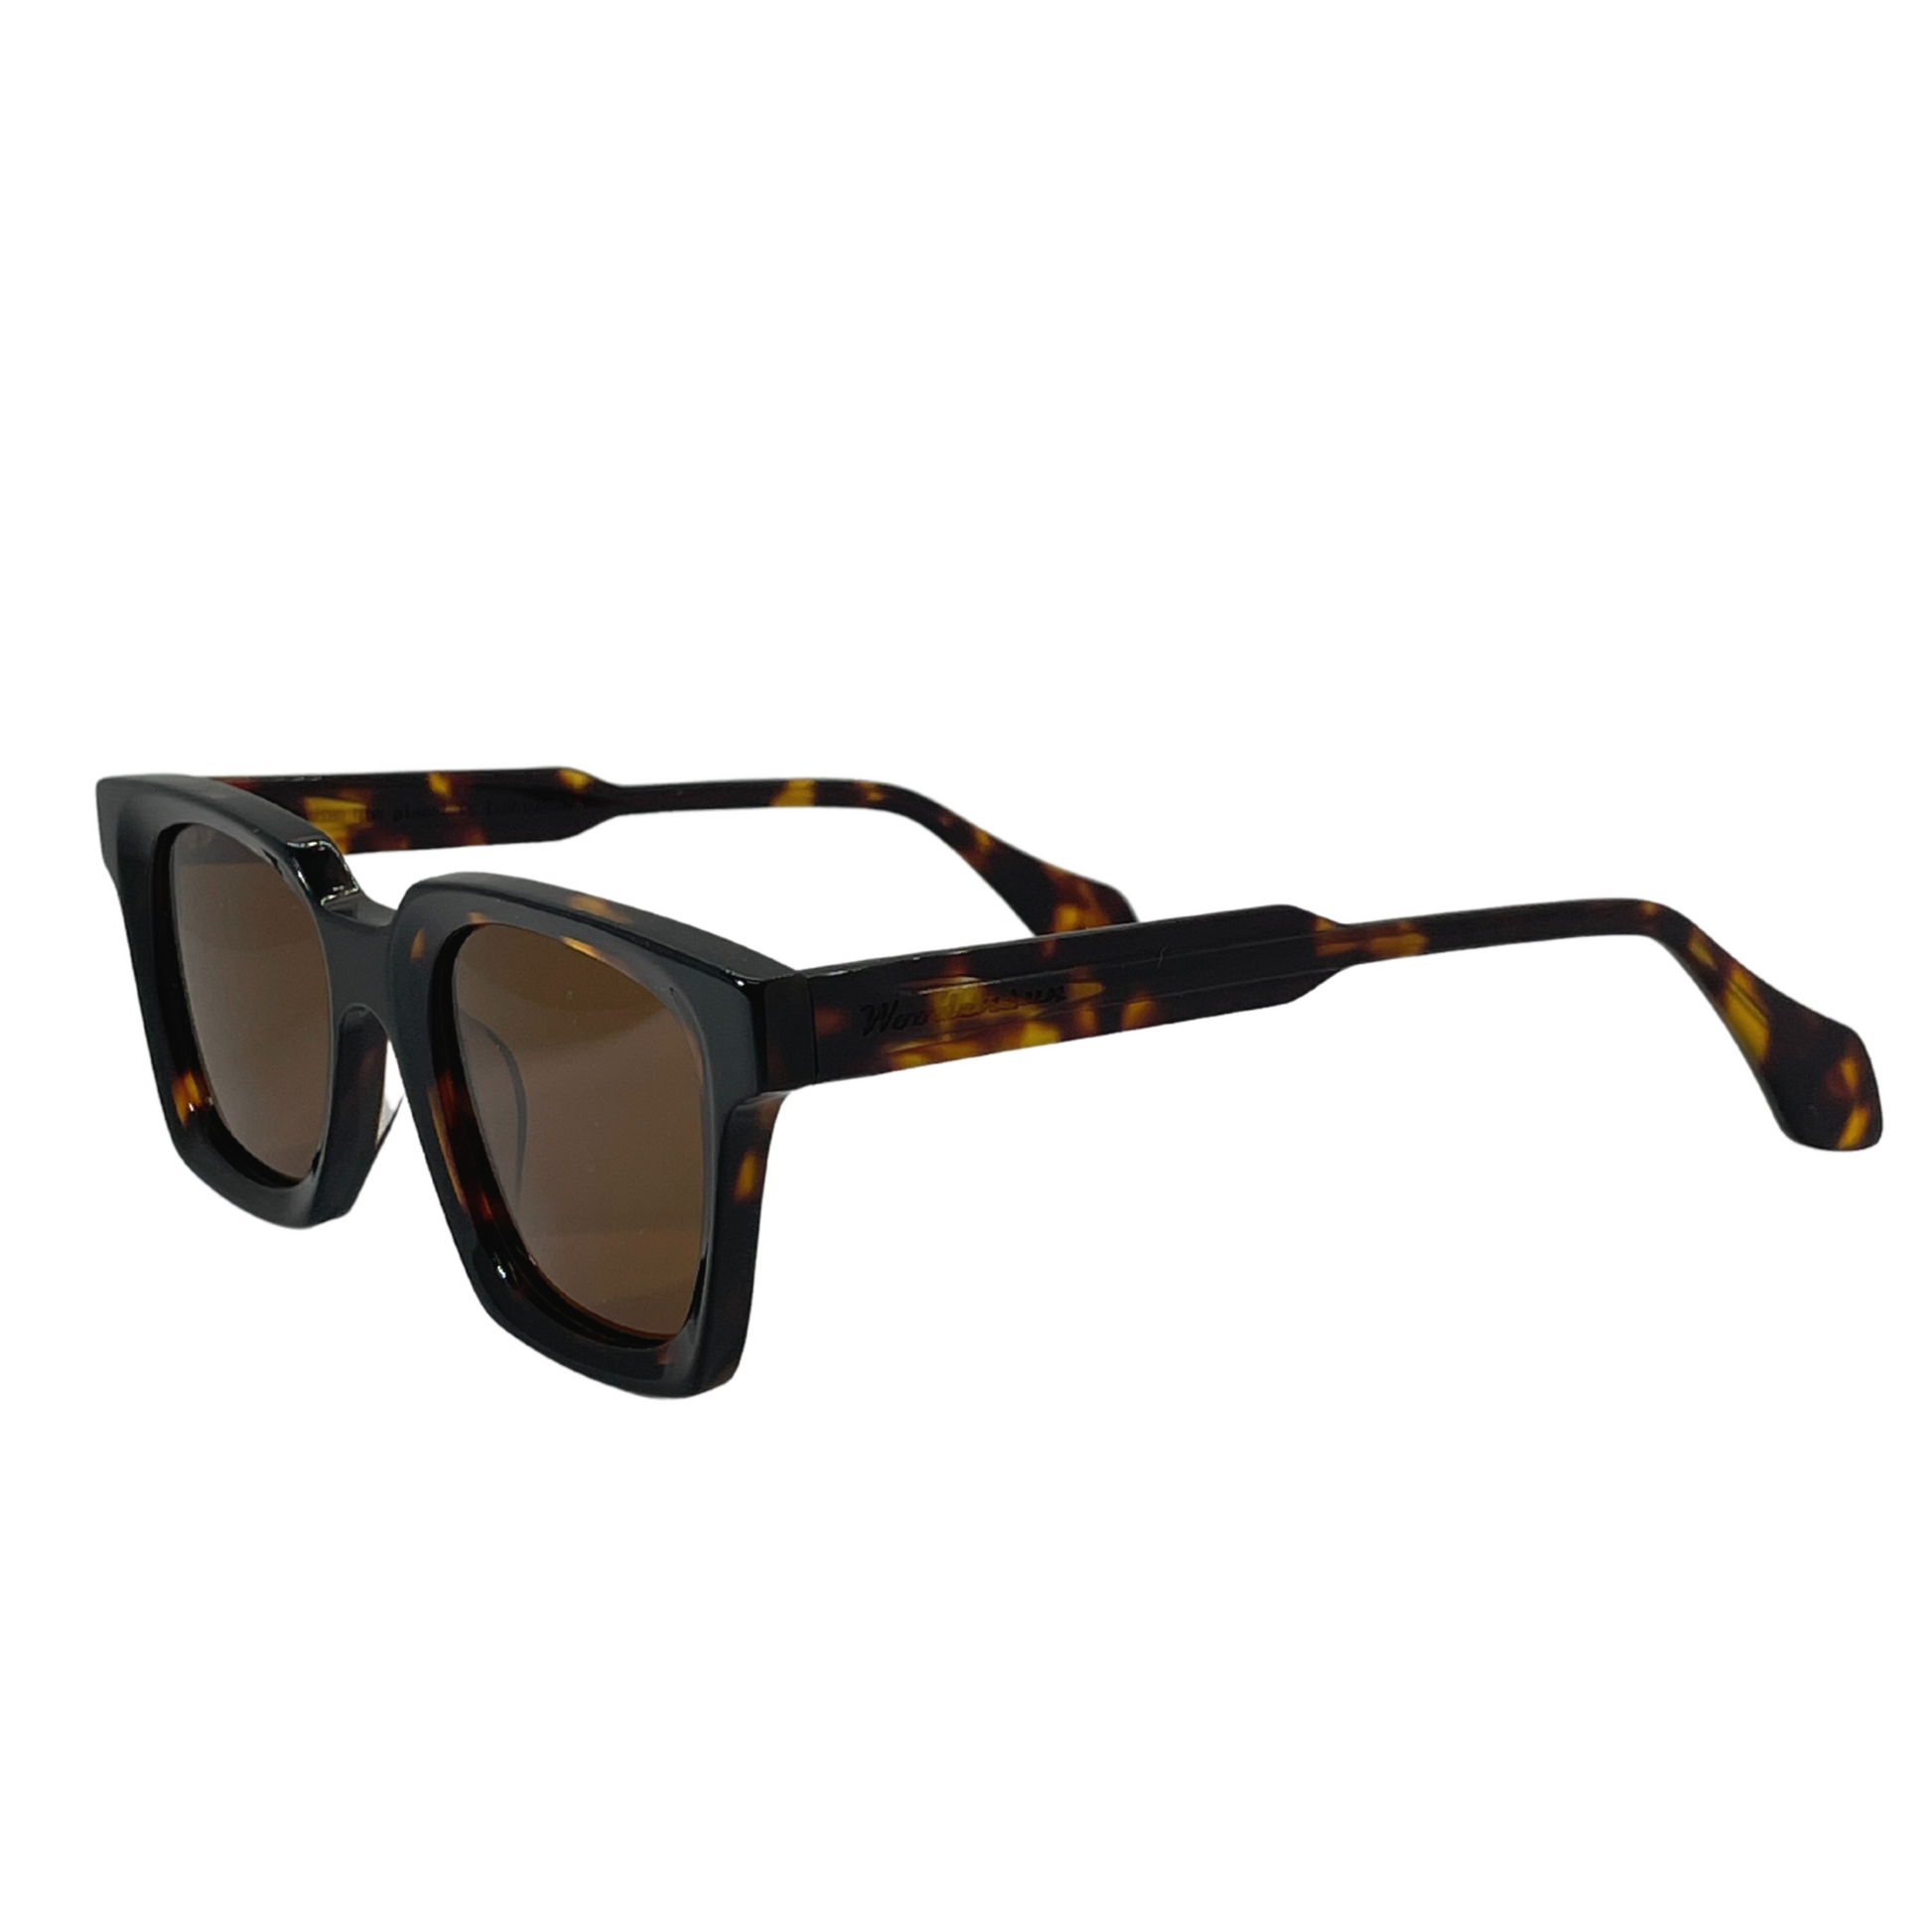 Manhattan Sunglasses - Woodensun Sunglasses | Eco-fashion eyewear